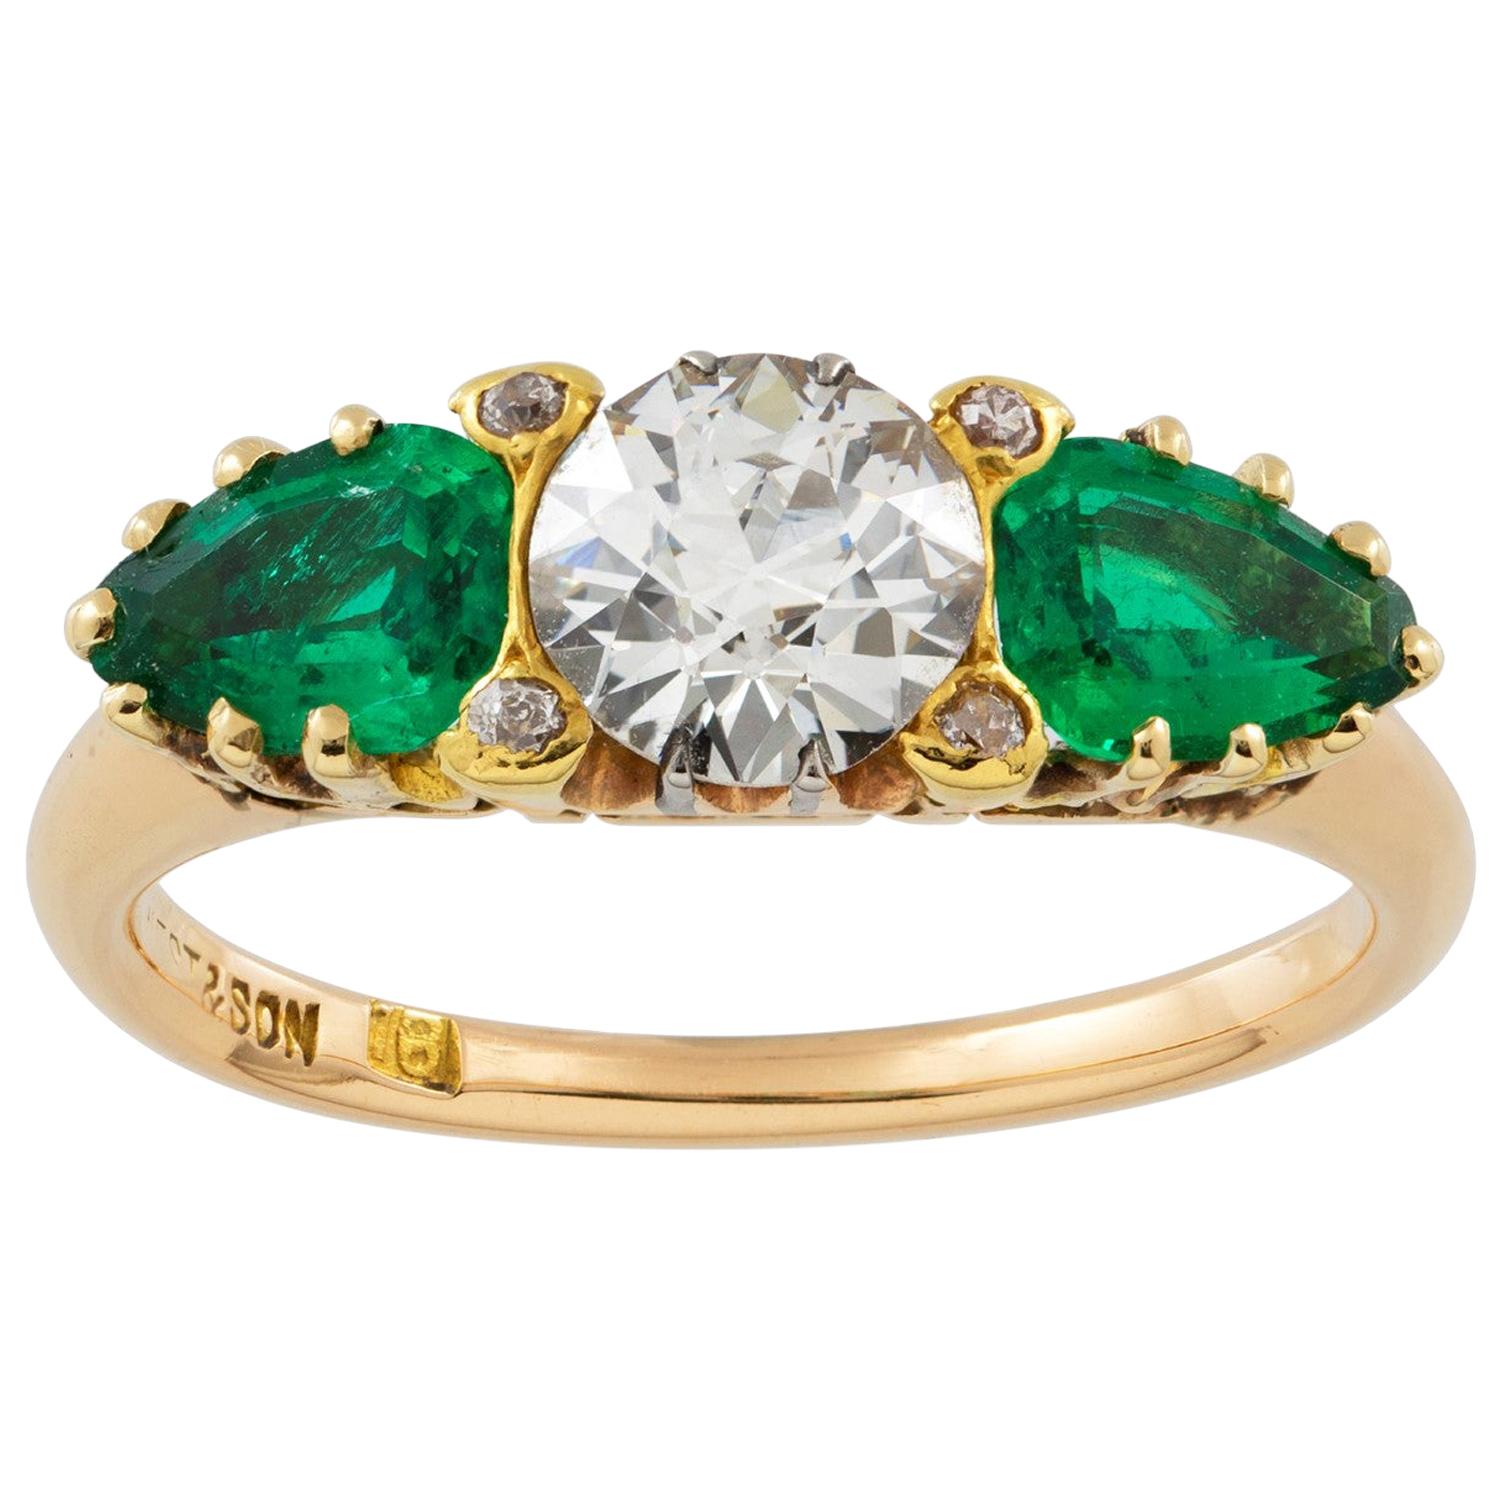 Early 20th Century Three-Stone Emerald and Diamond Ring